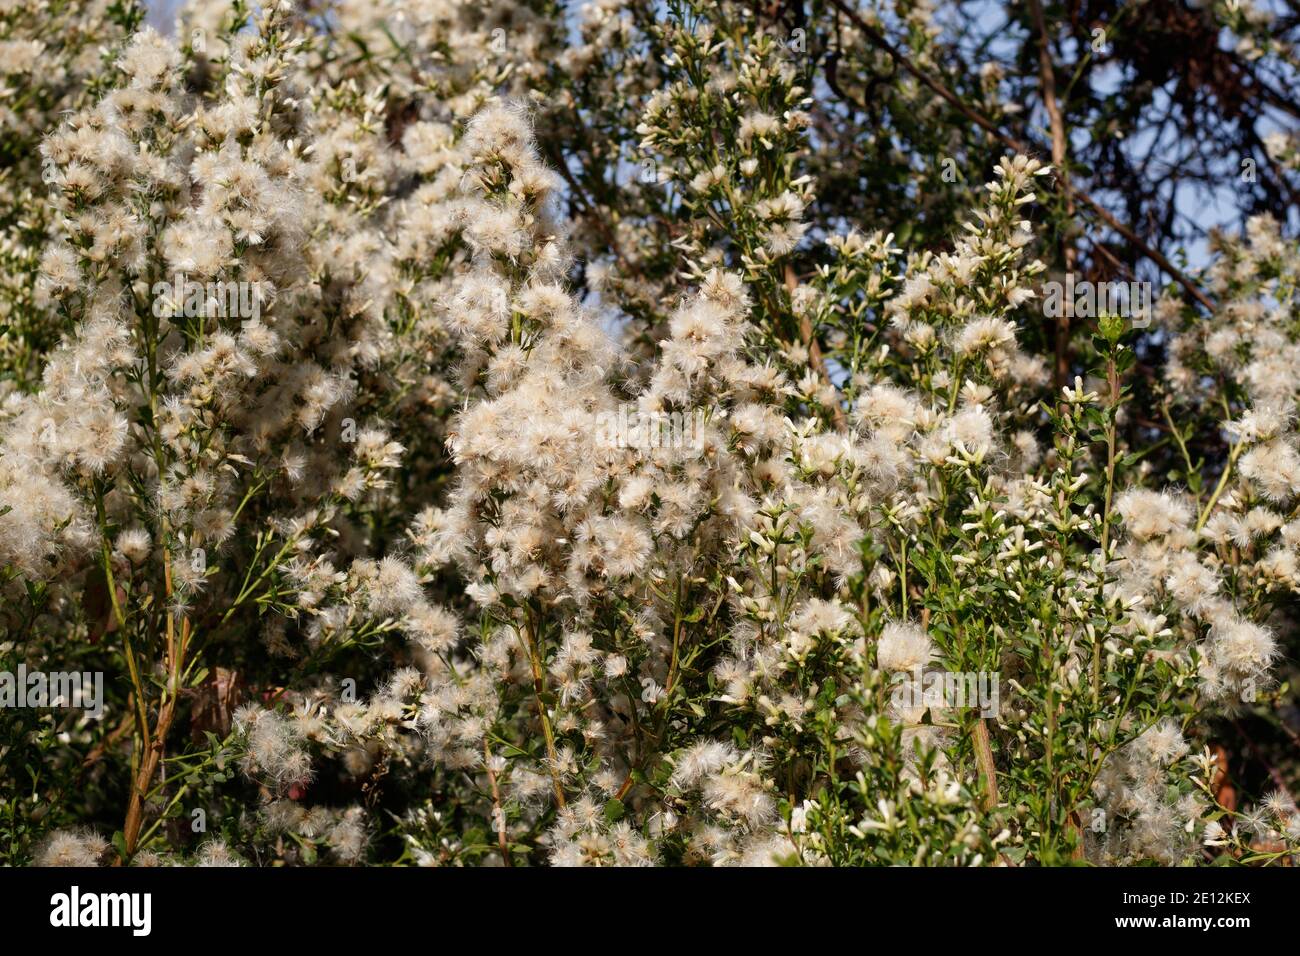 White pappus achene fruit, Coyote Bush, Baccharis Pilularis, Asteraceae, native shrub, Ballona Freshwater Marsh, Southern California Coast, autumn. Stock Photo